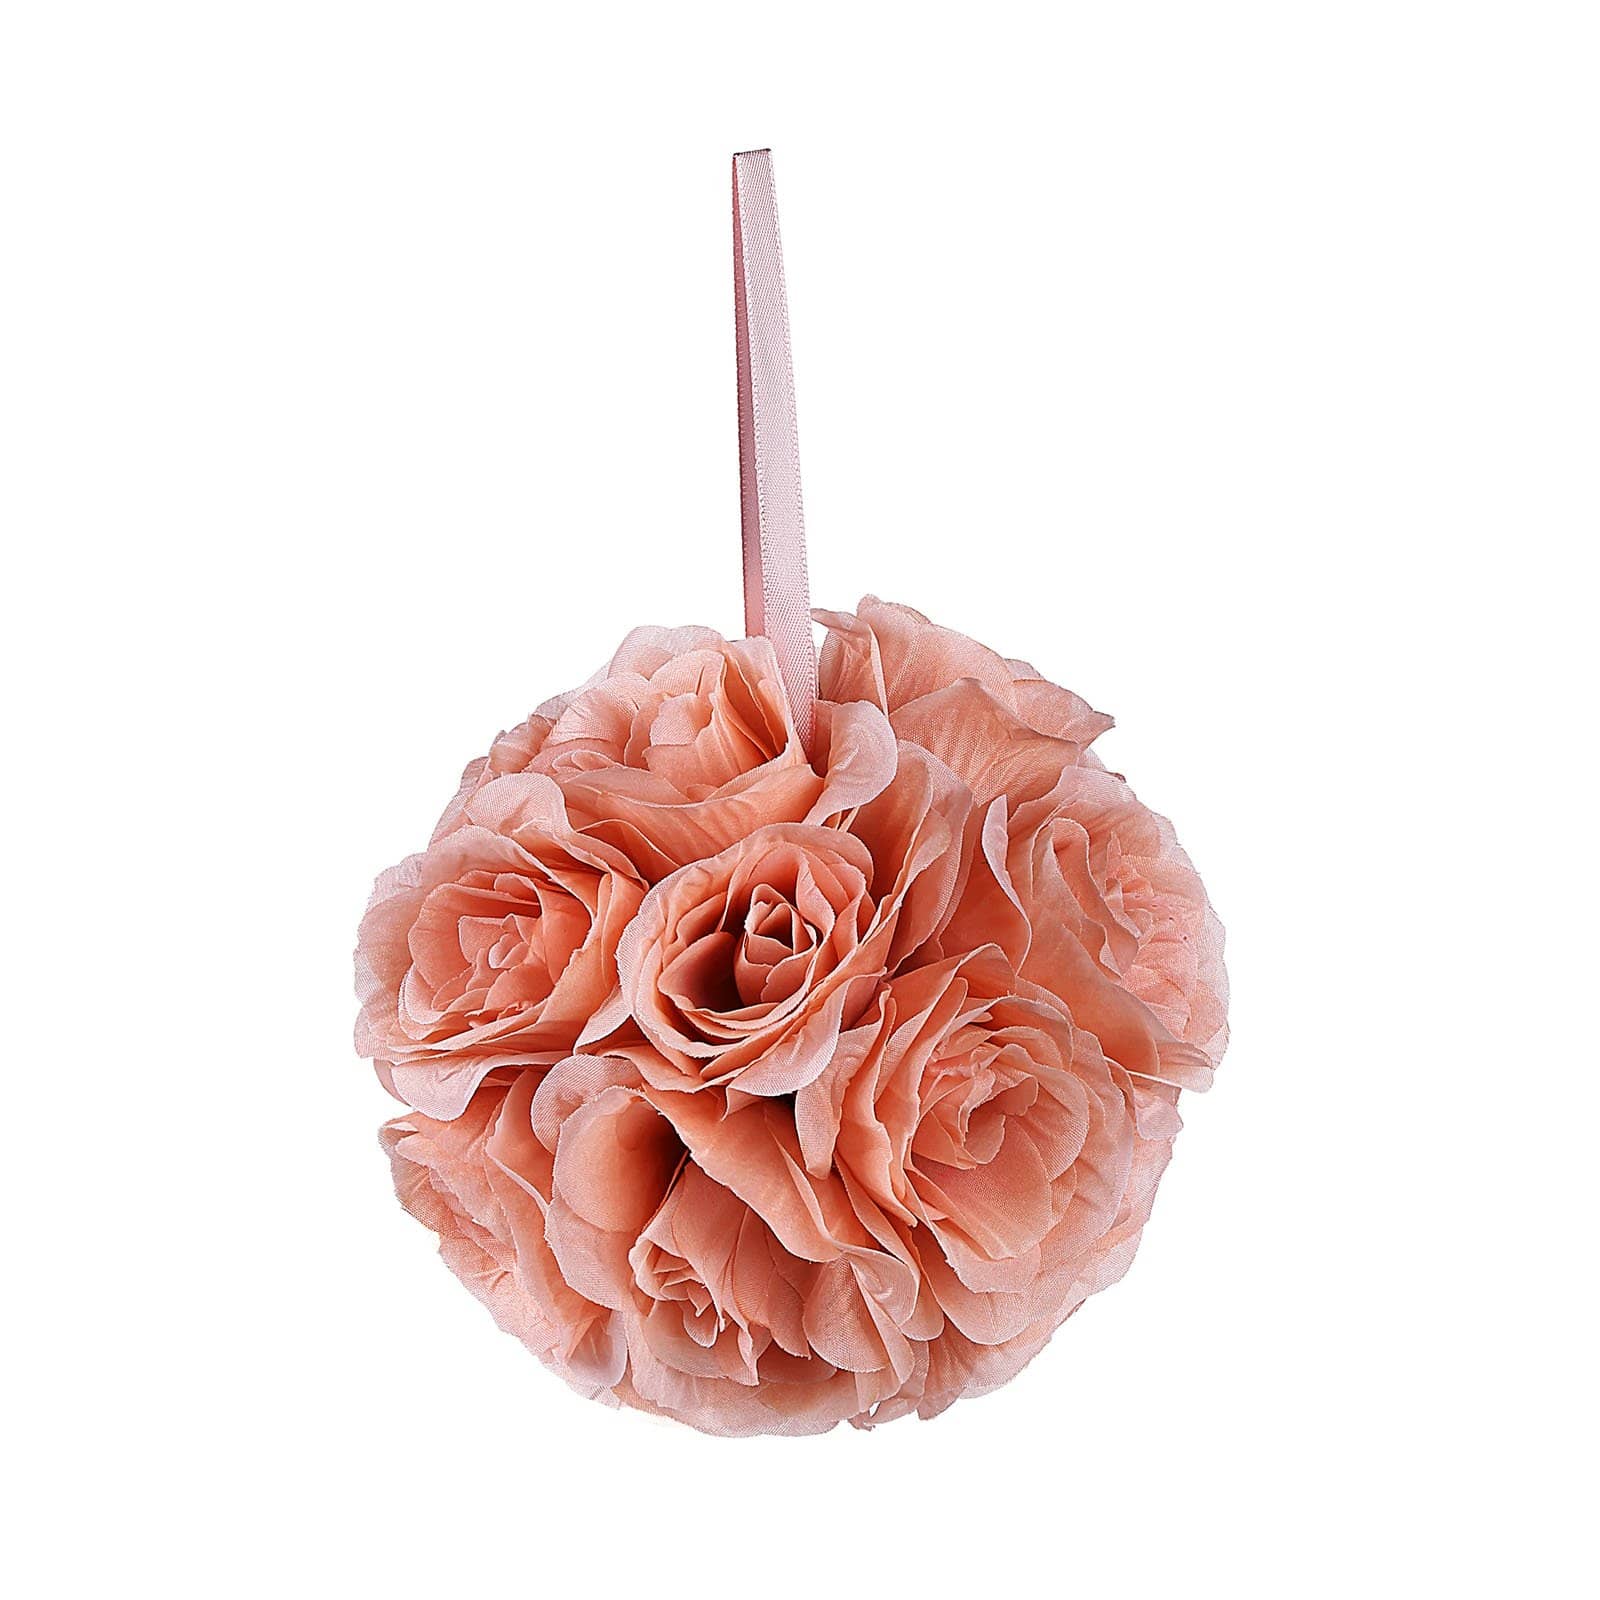 2 pcs 7 in wide Roses Kissing Flower Balls